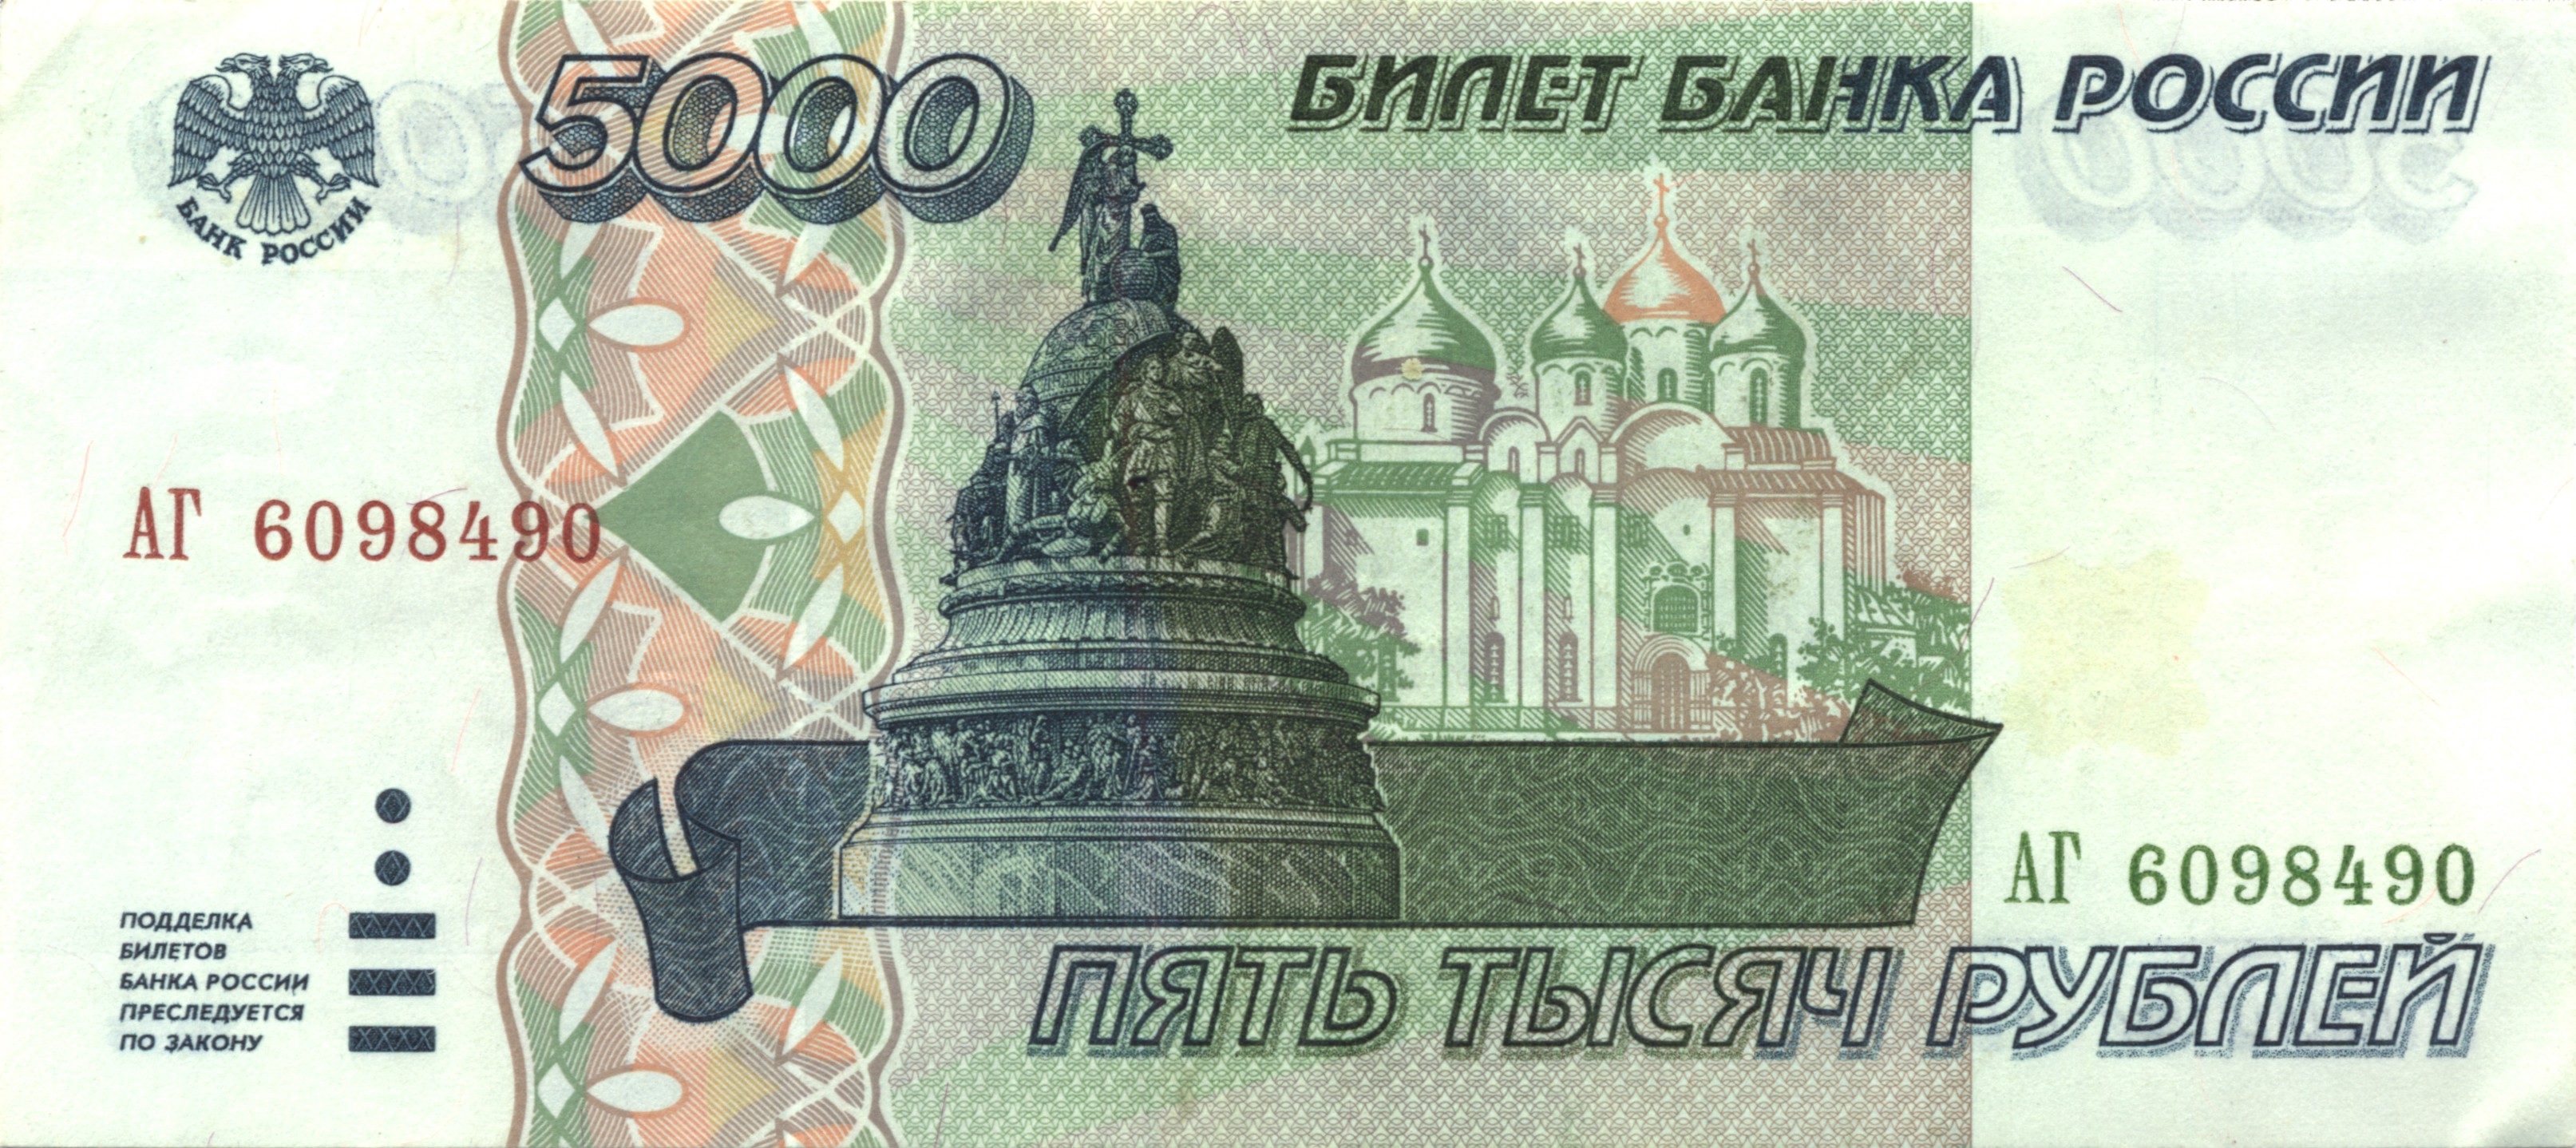 Russian 5000 ruble banknote | Currency Wiki | FANDOM powered by Wikia